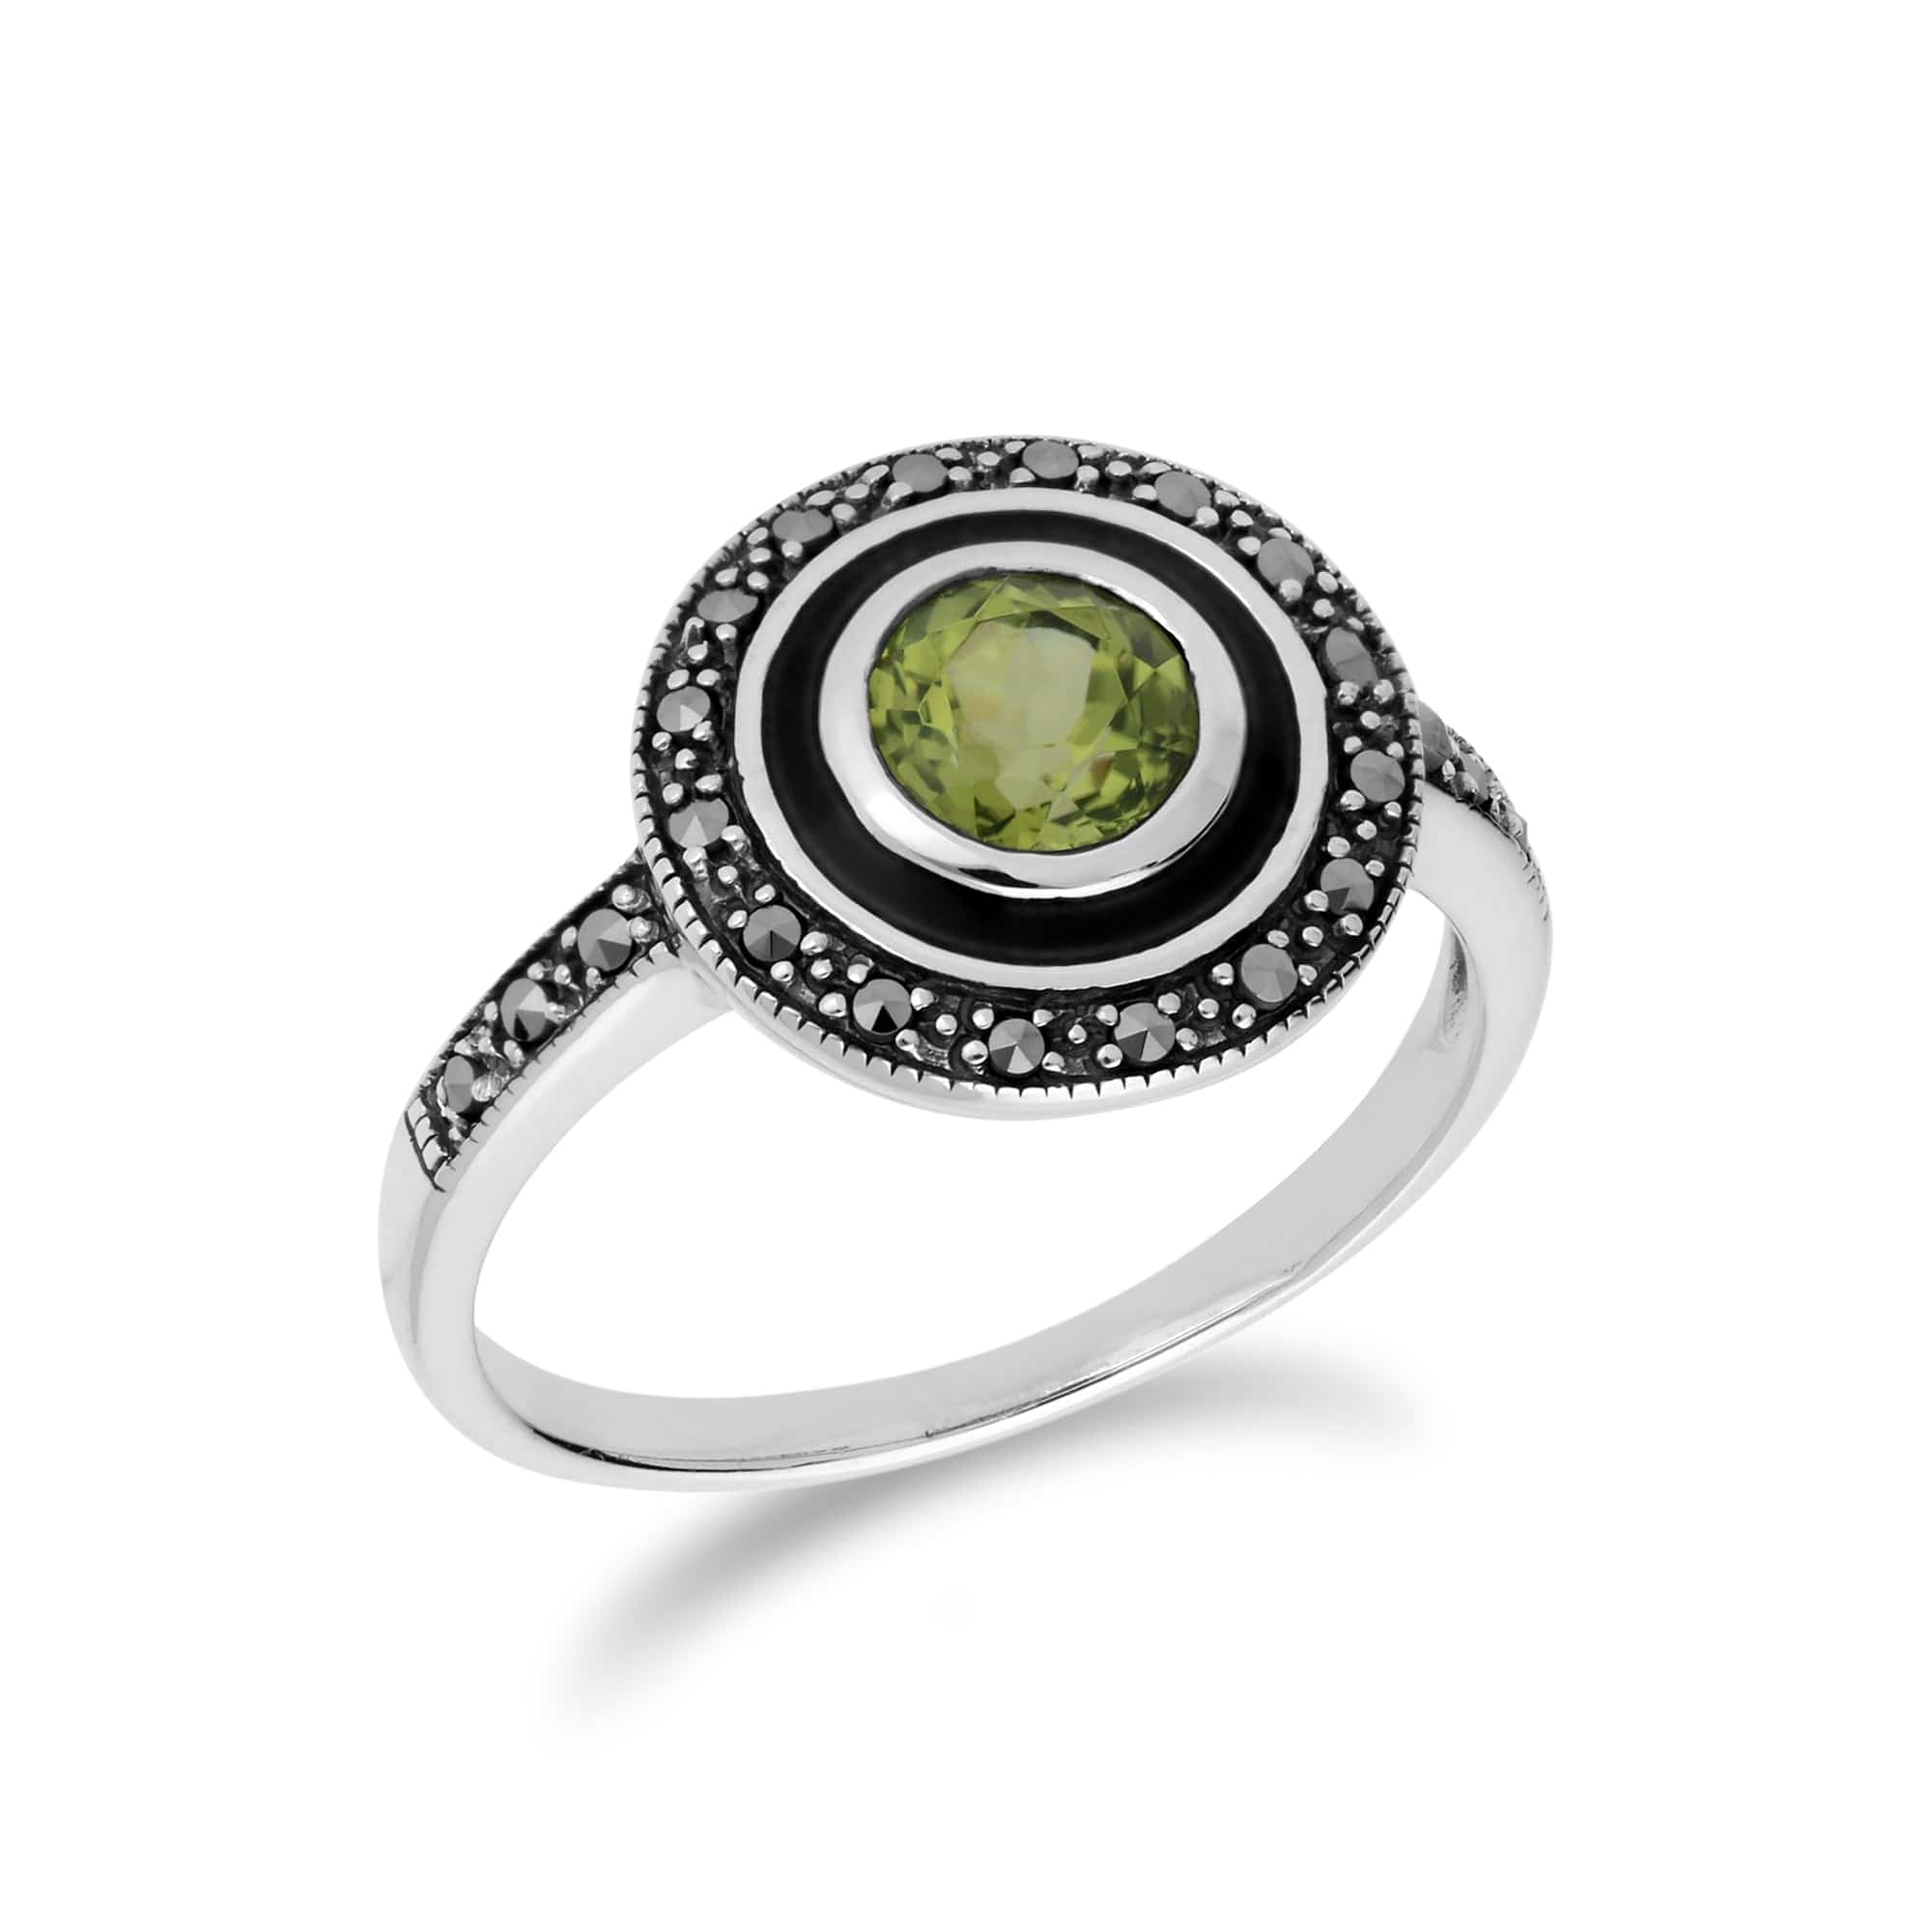 214R599604925 Art Deco Style Round Peridot & Black Enamel Halo Ring in 925 Sterling Silver 1